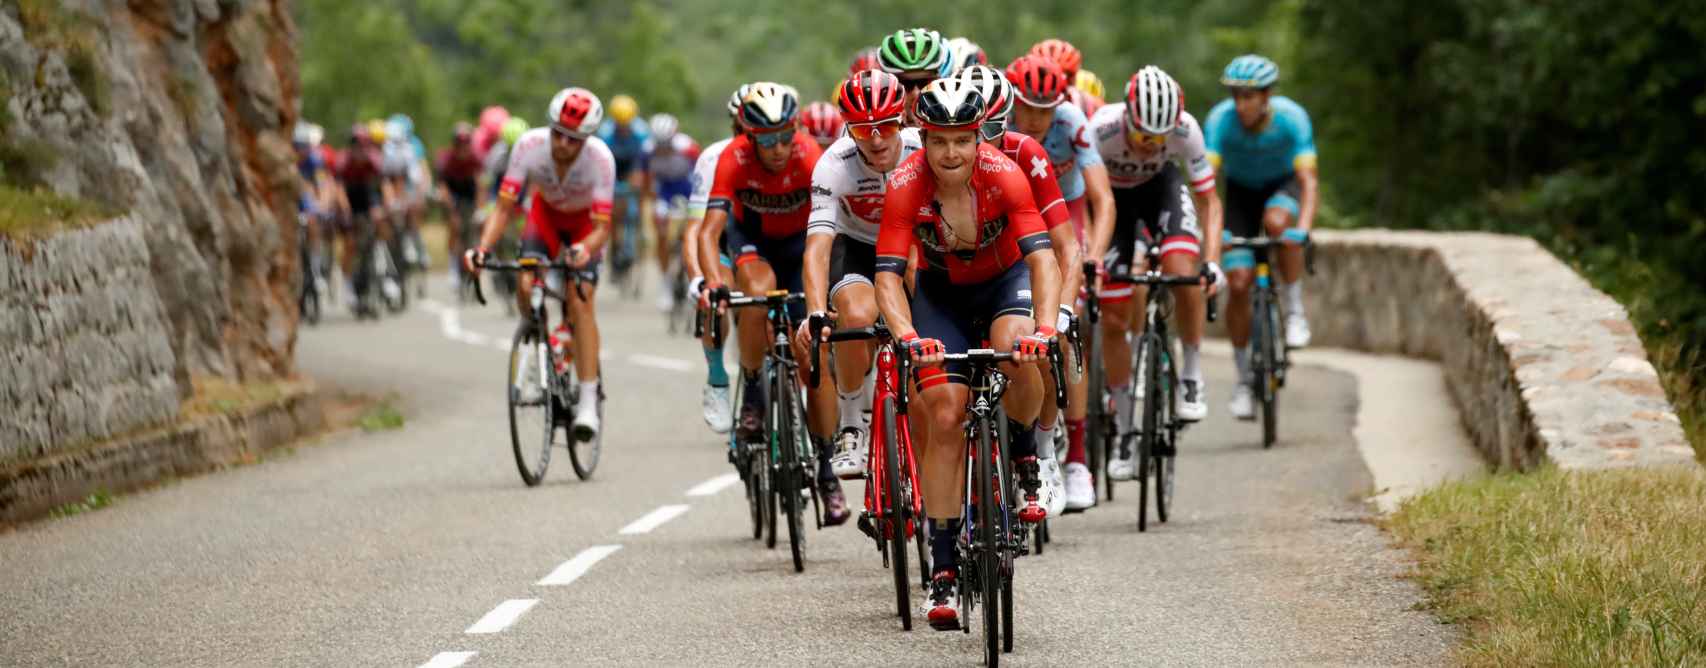 En directo 18ª etapa del Tour de Francia 2019 entre Embrun y Valloire